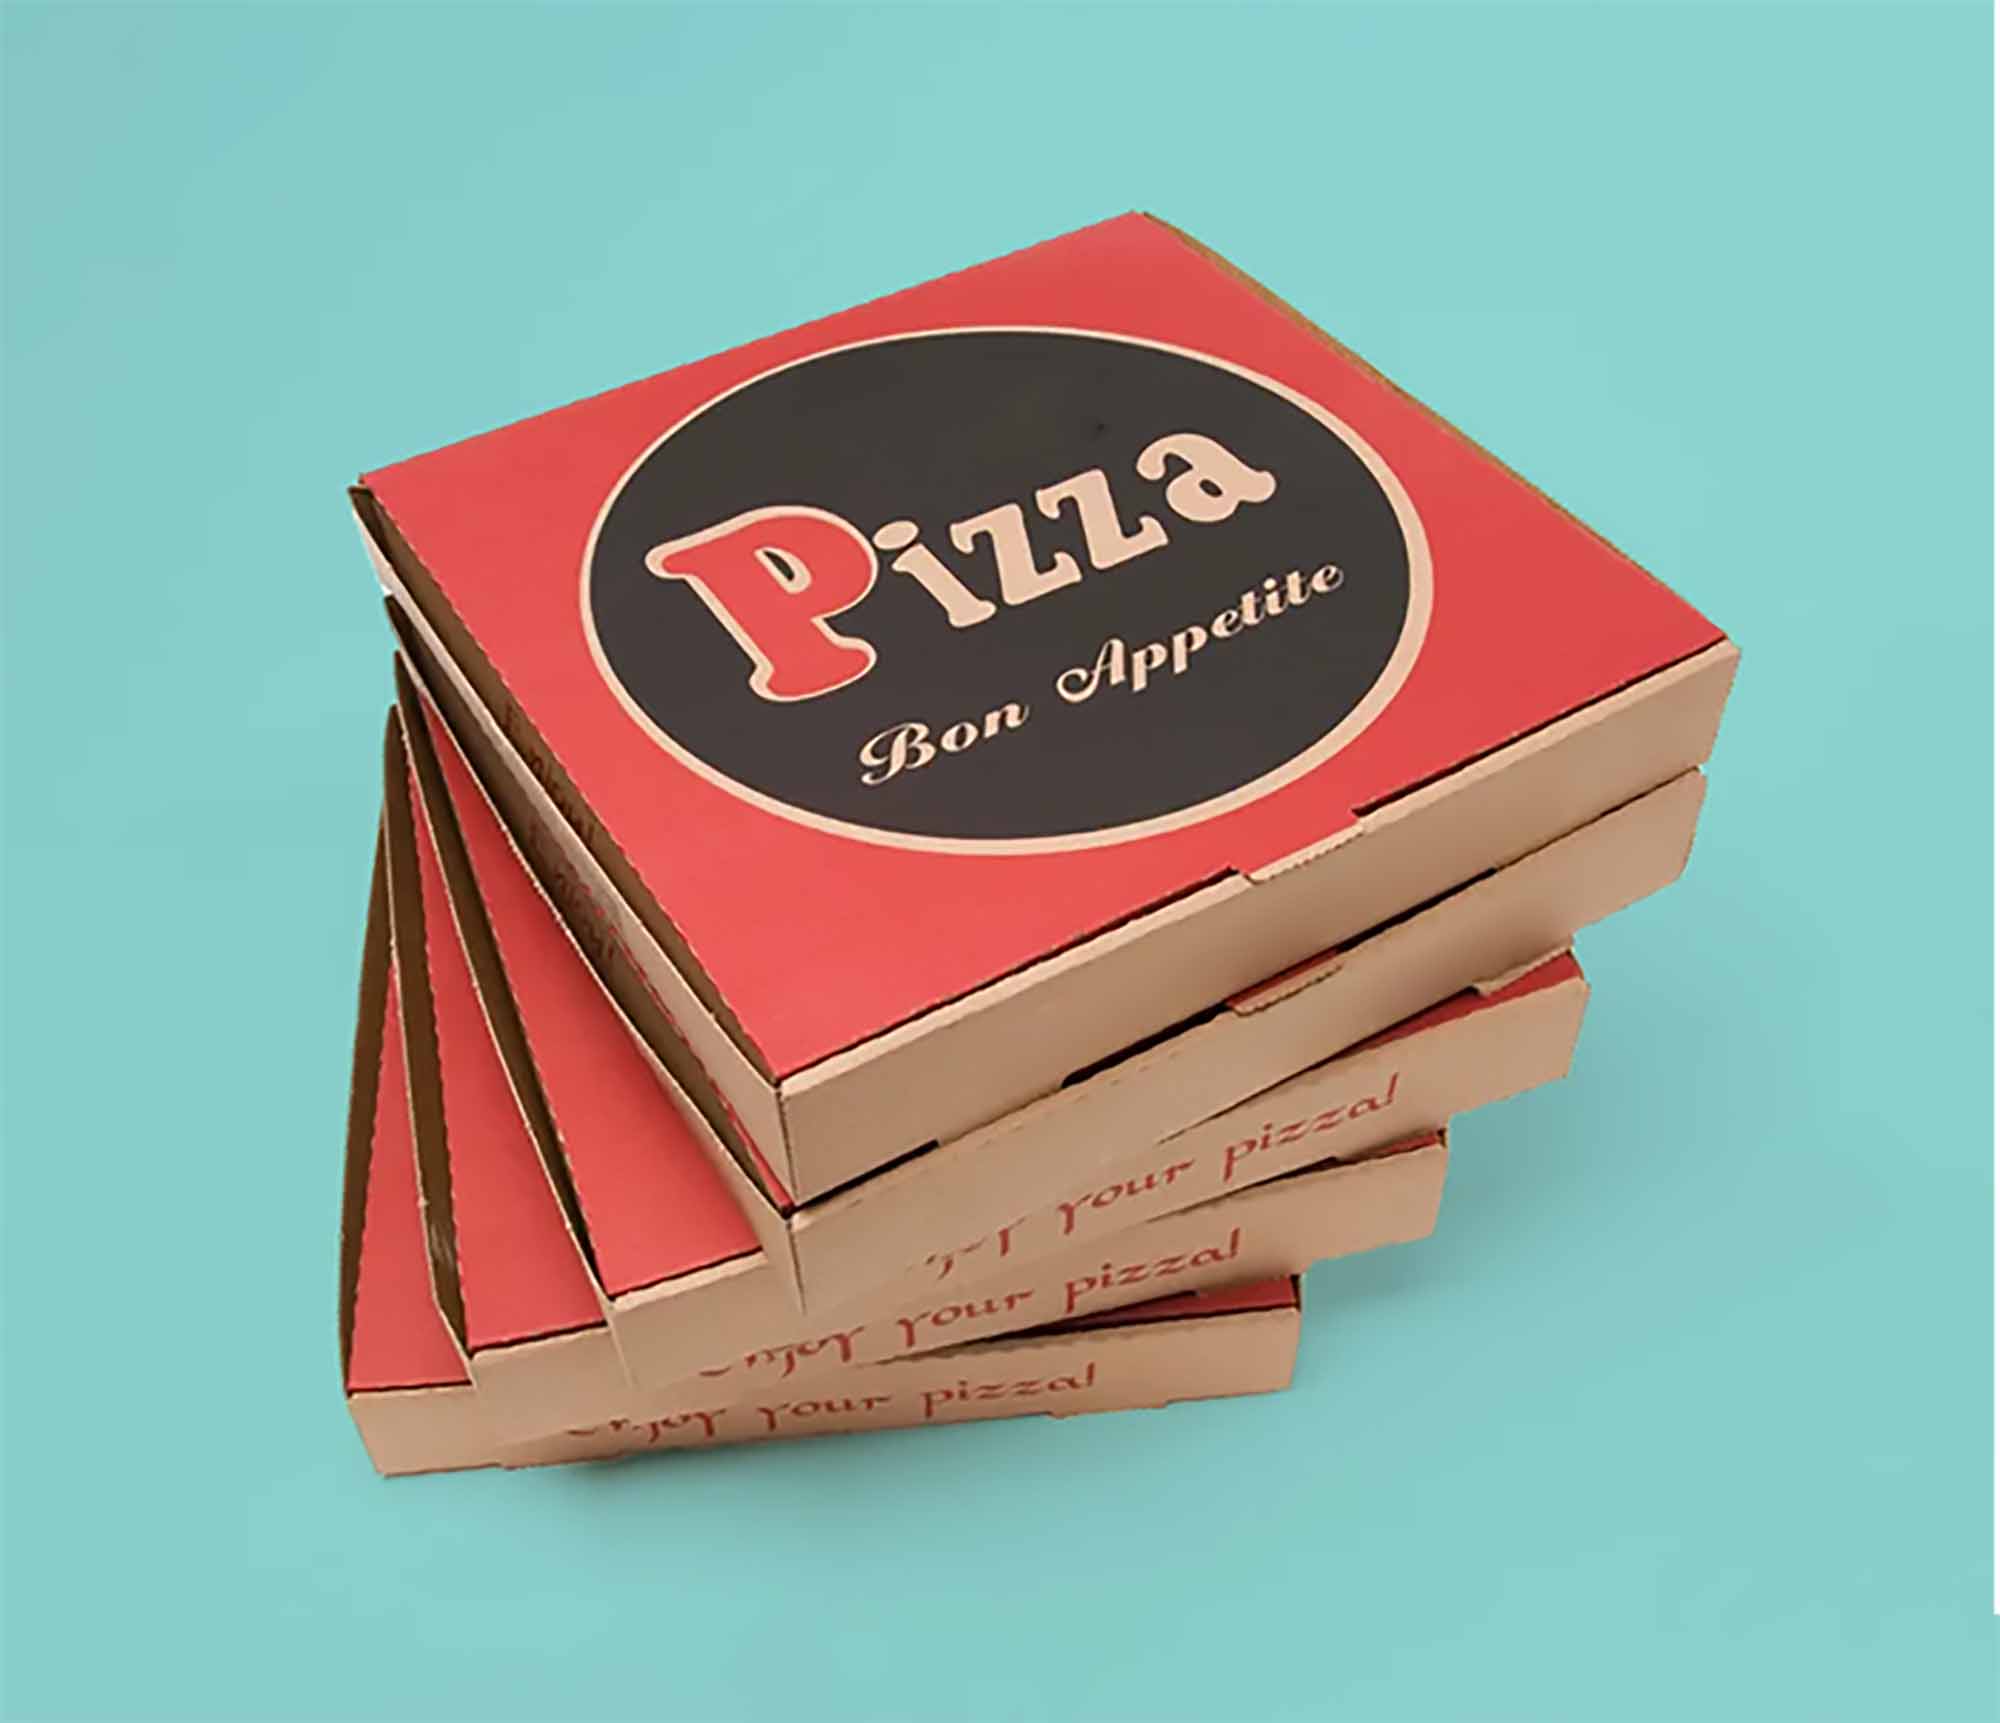 Disposable Pizza Boxes 